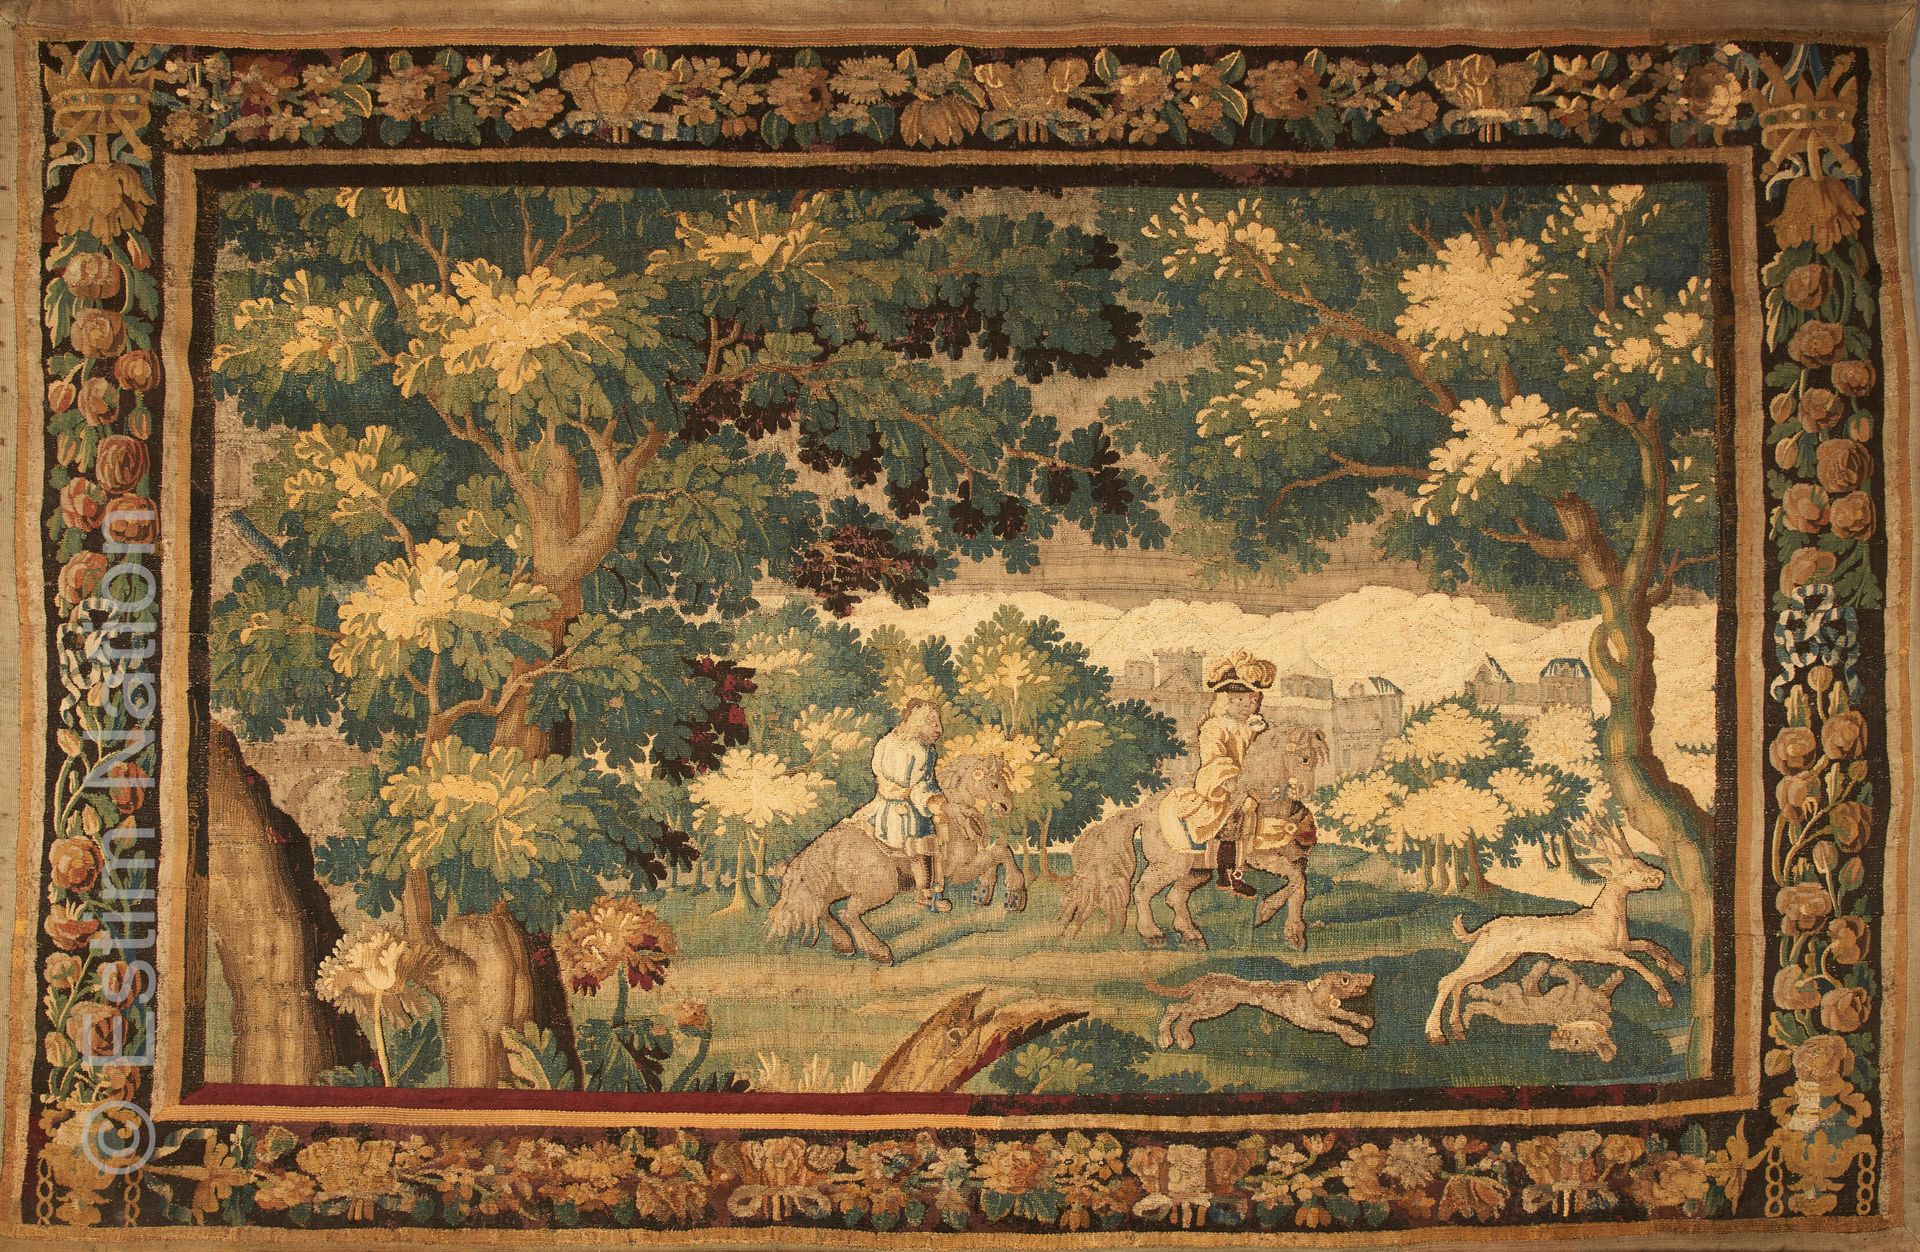 AUBUSSON 被称为 "verdure "的多色羊毛挂毯，装饰着一个狩猎场景，画面上有两个骑手和他们的狗在跟踪一只鹿，背景是一座城堡，丰富的边框和棕色背景上&hellip;